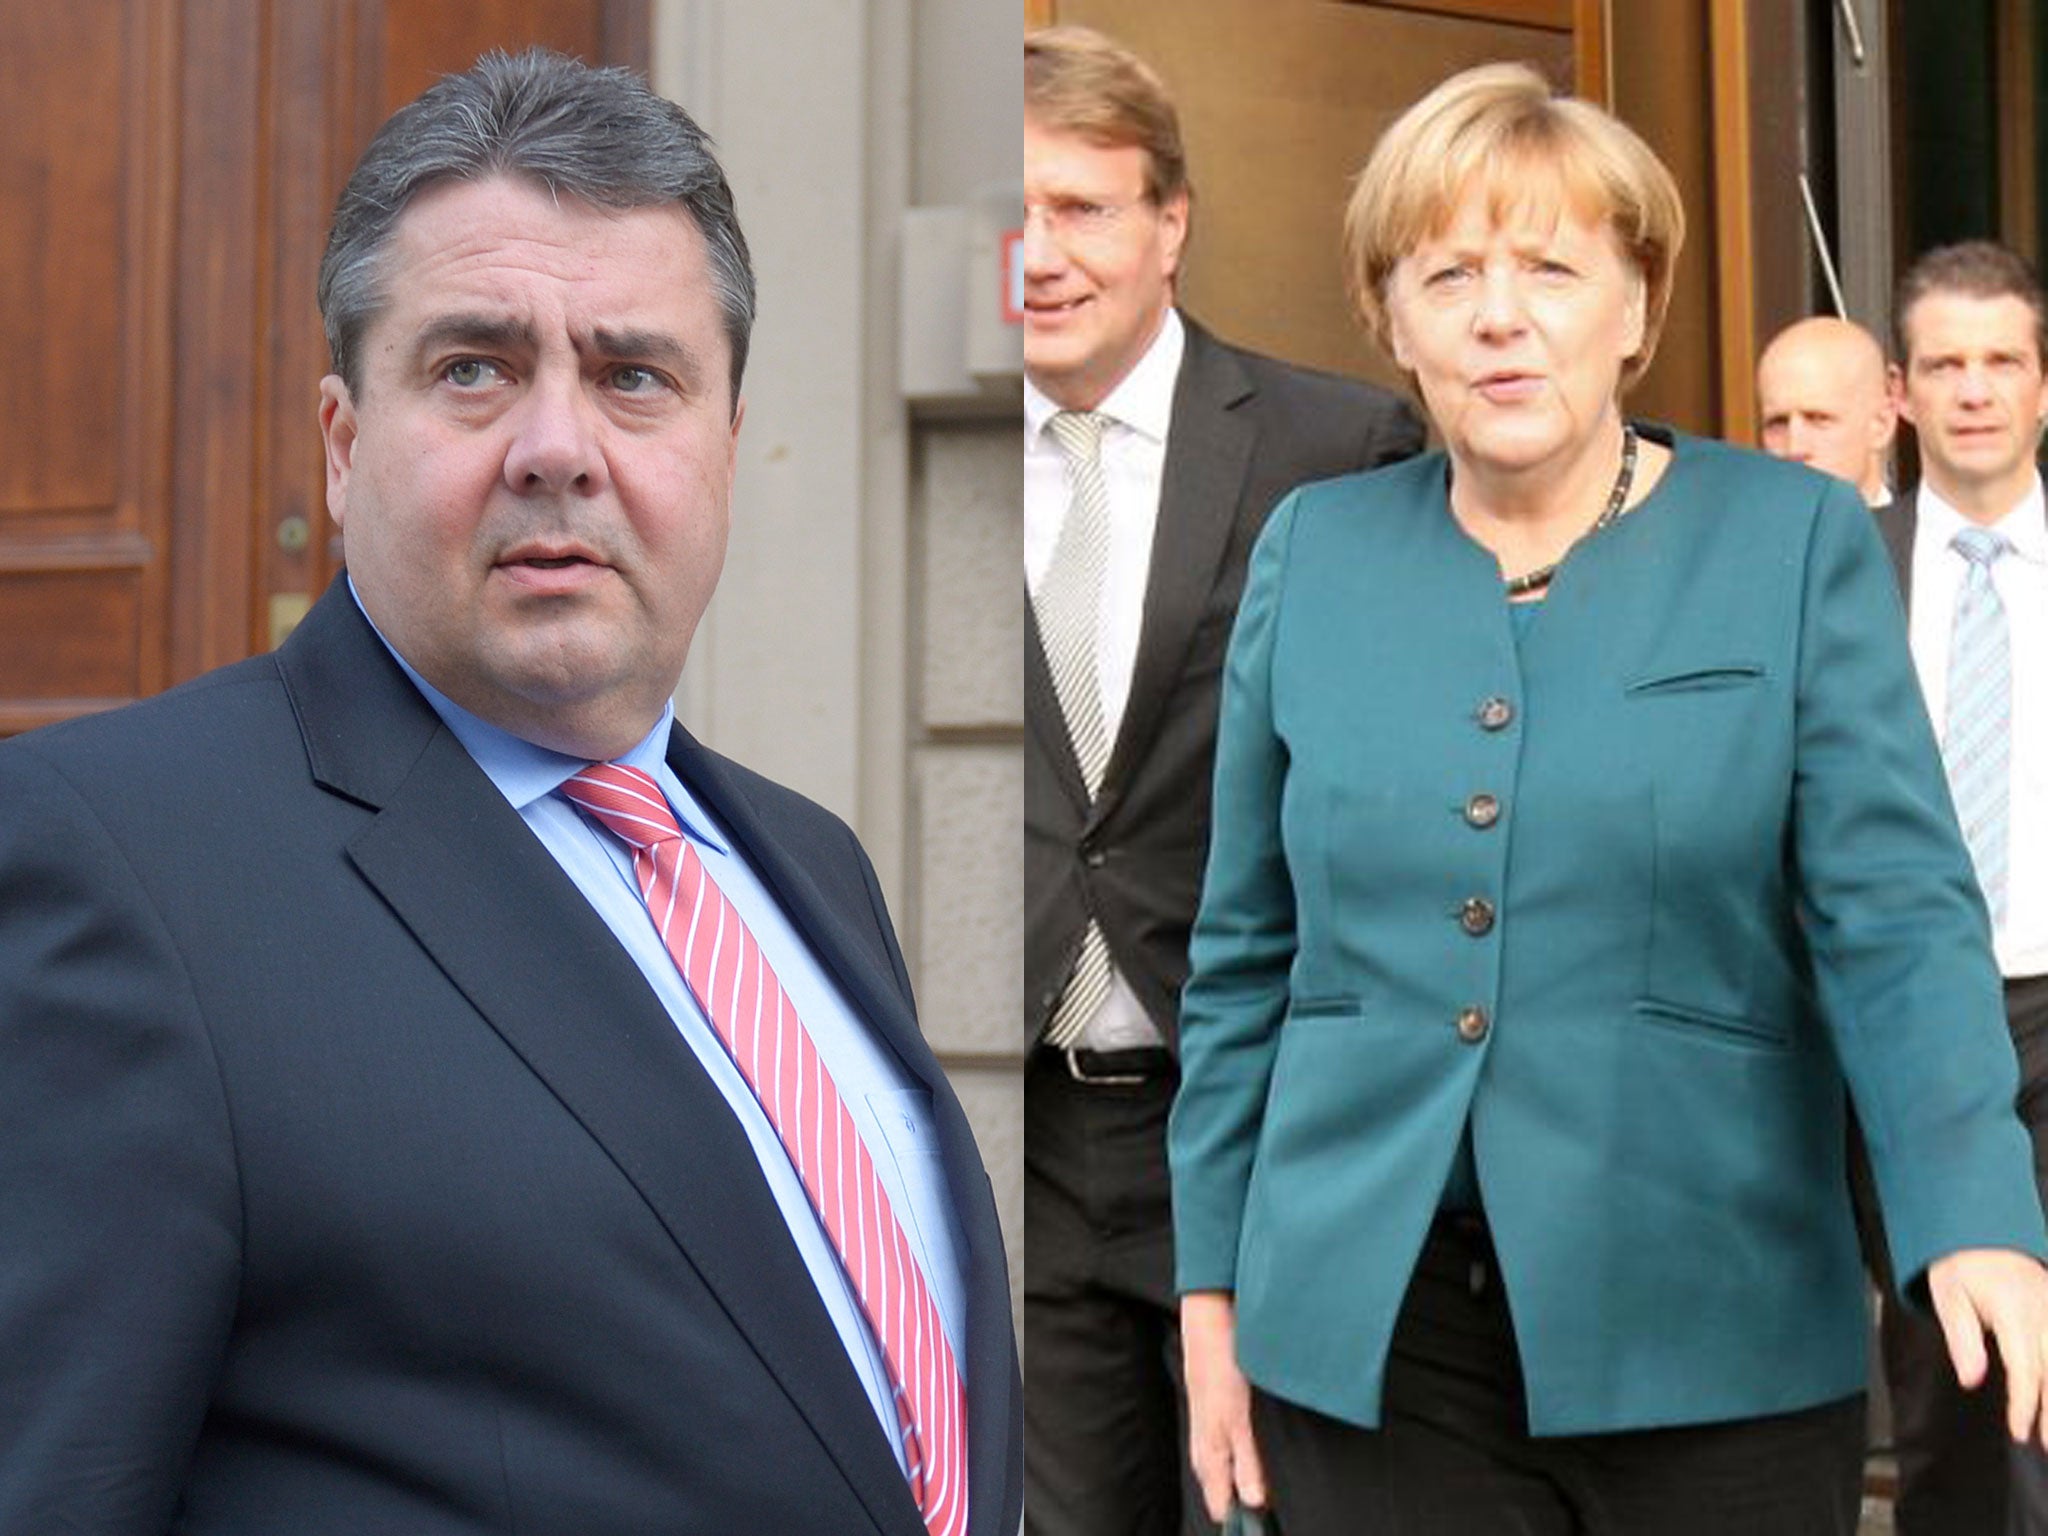 Social Democrat (SPD) leader Sigmar Gabriel, right, and German Chancellor Angela Merkel